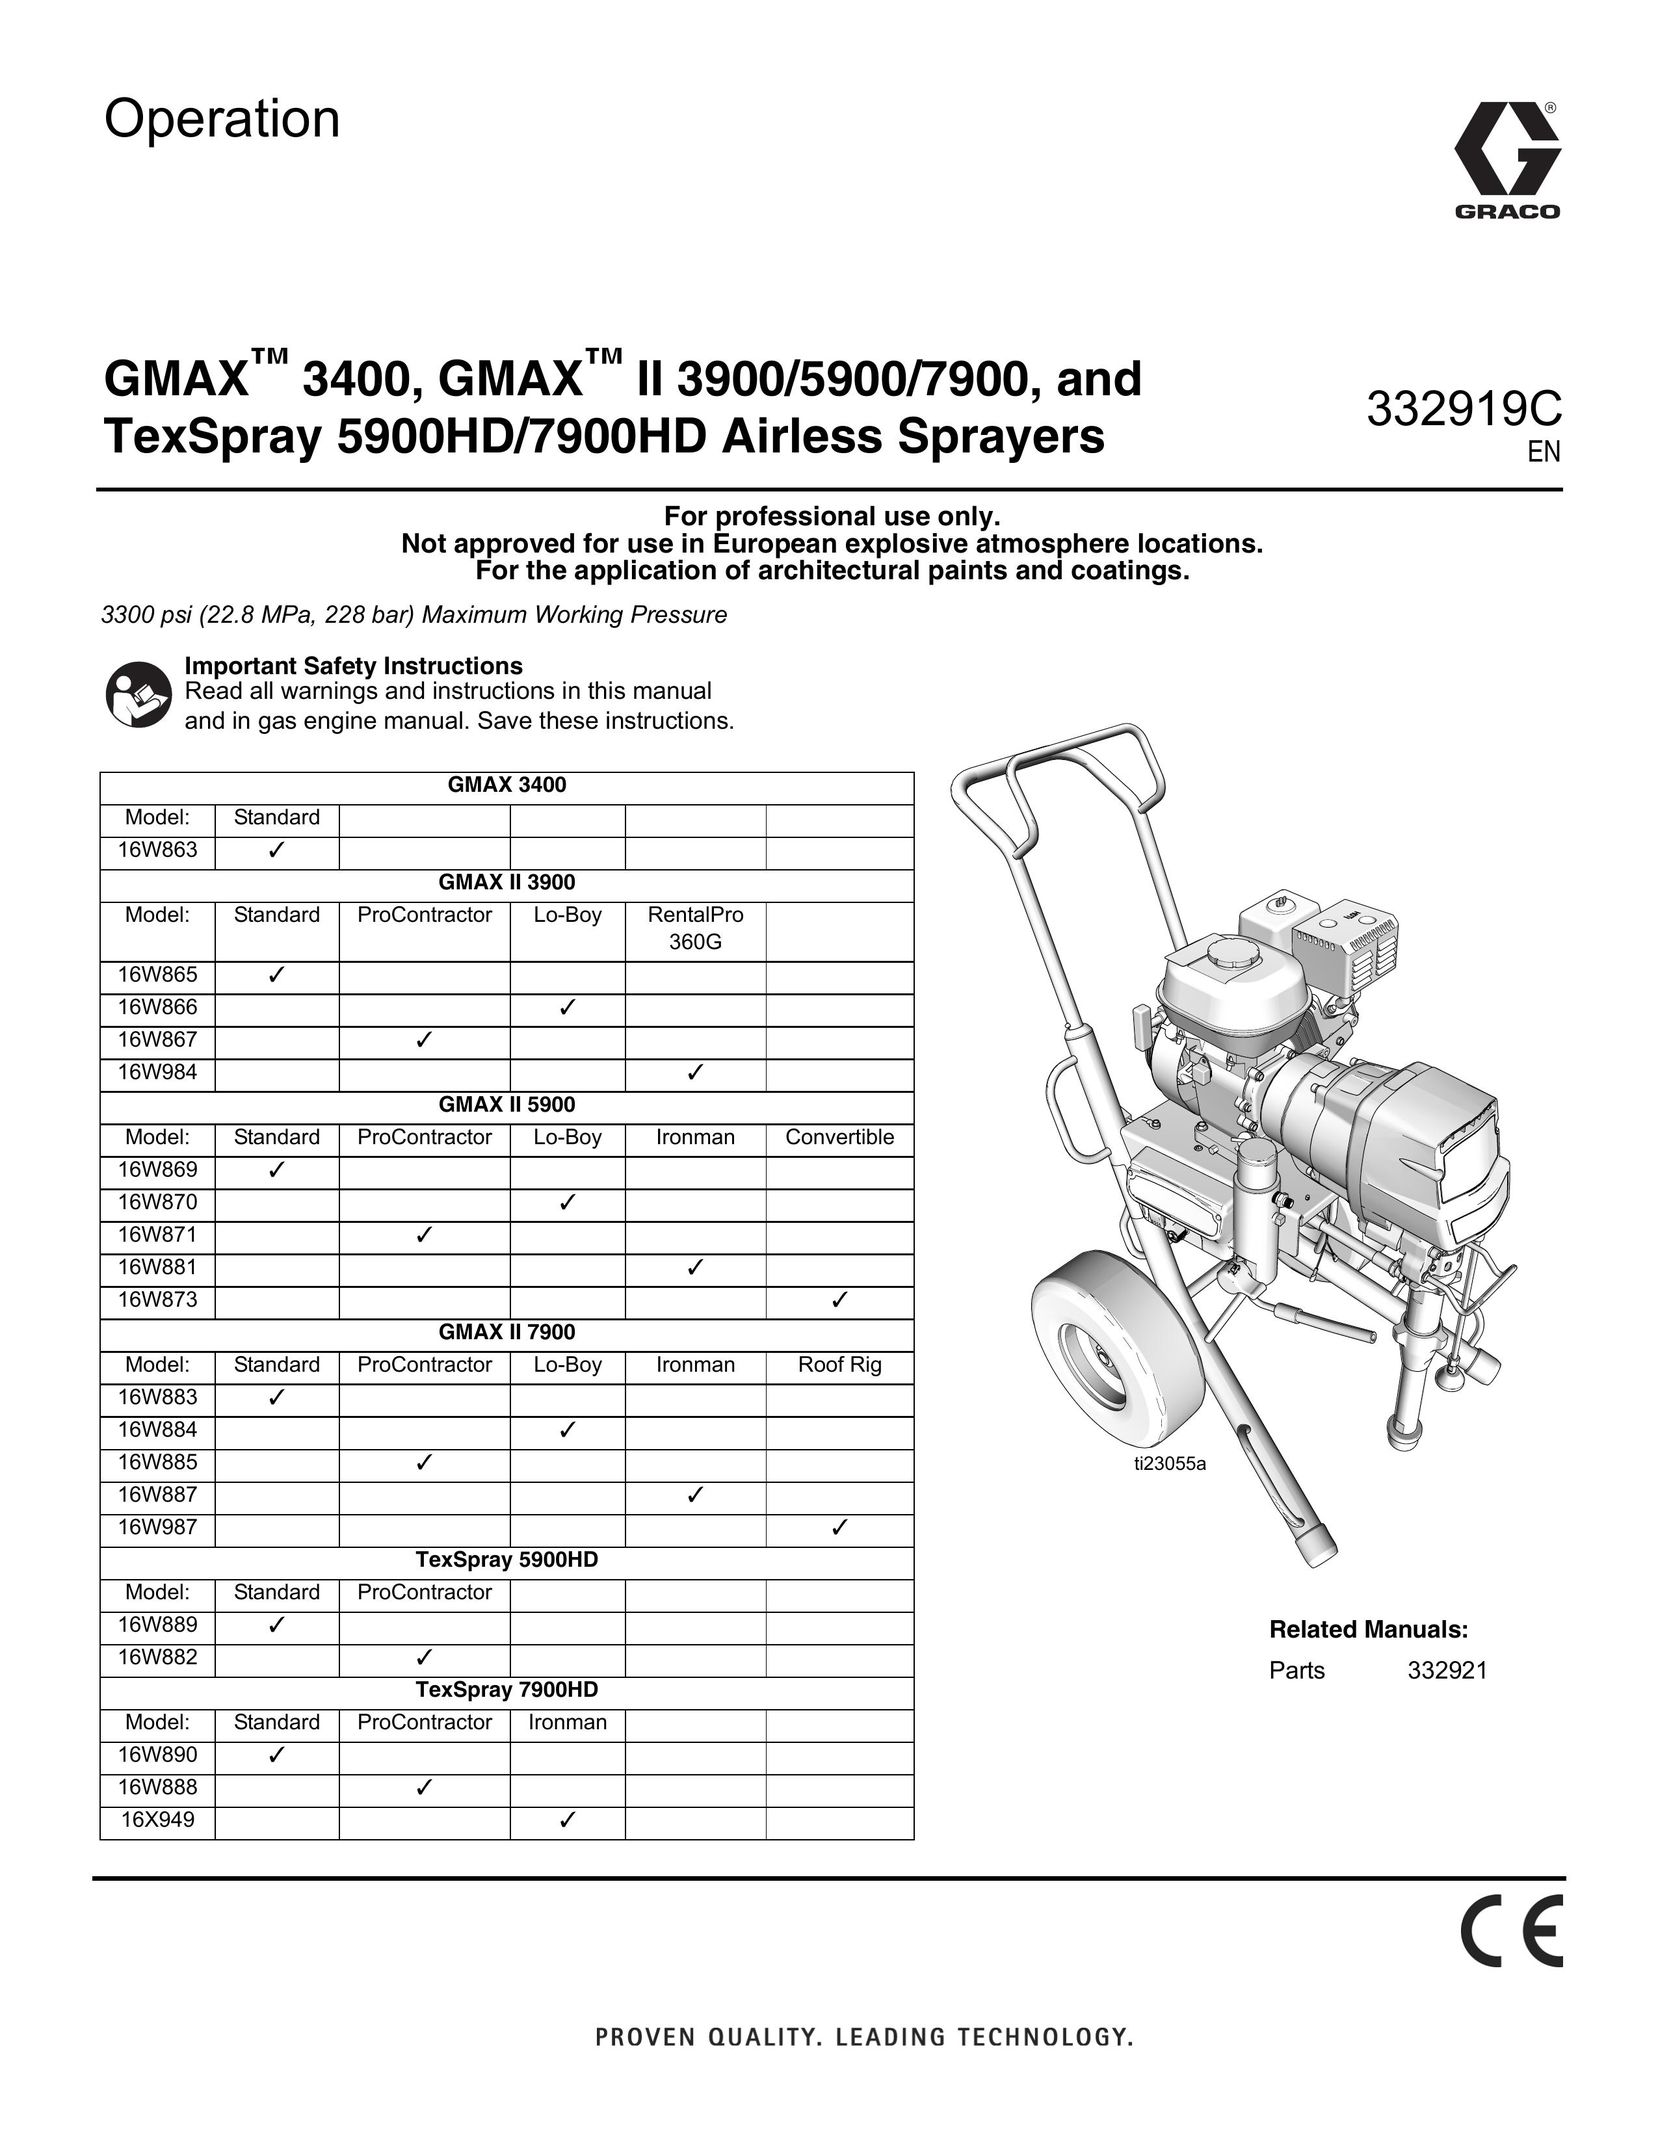 Graco 16W984 Paint Sprayer User Manual